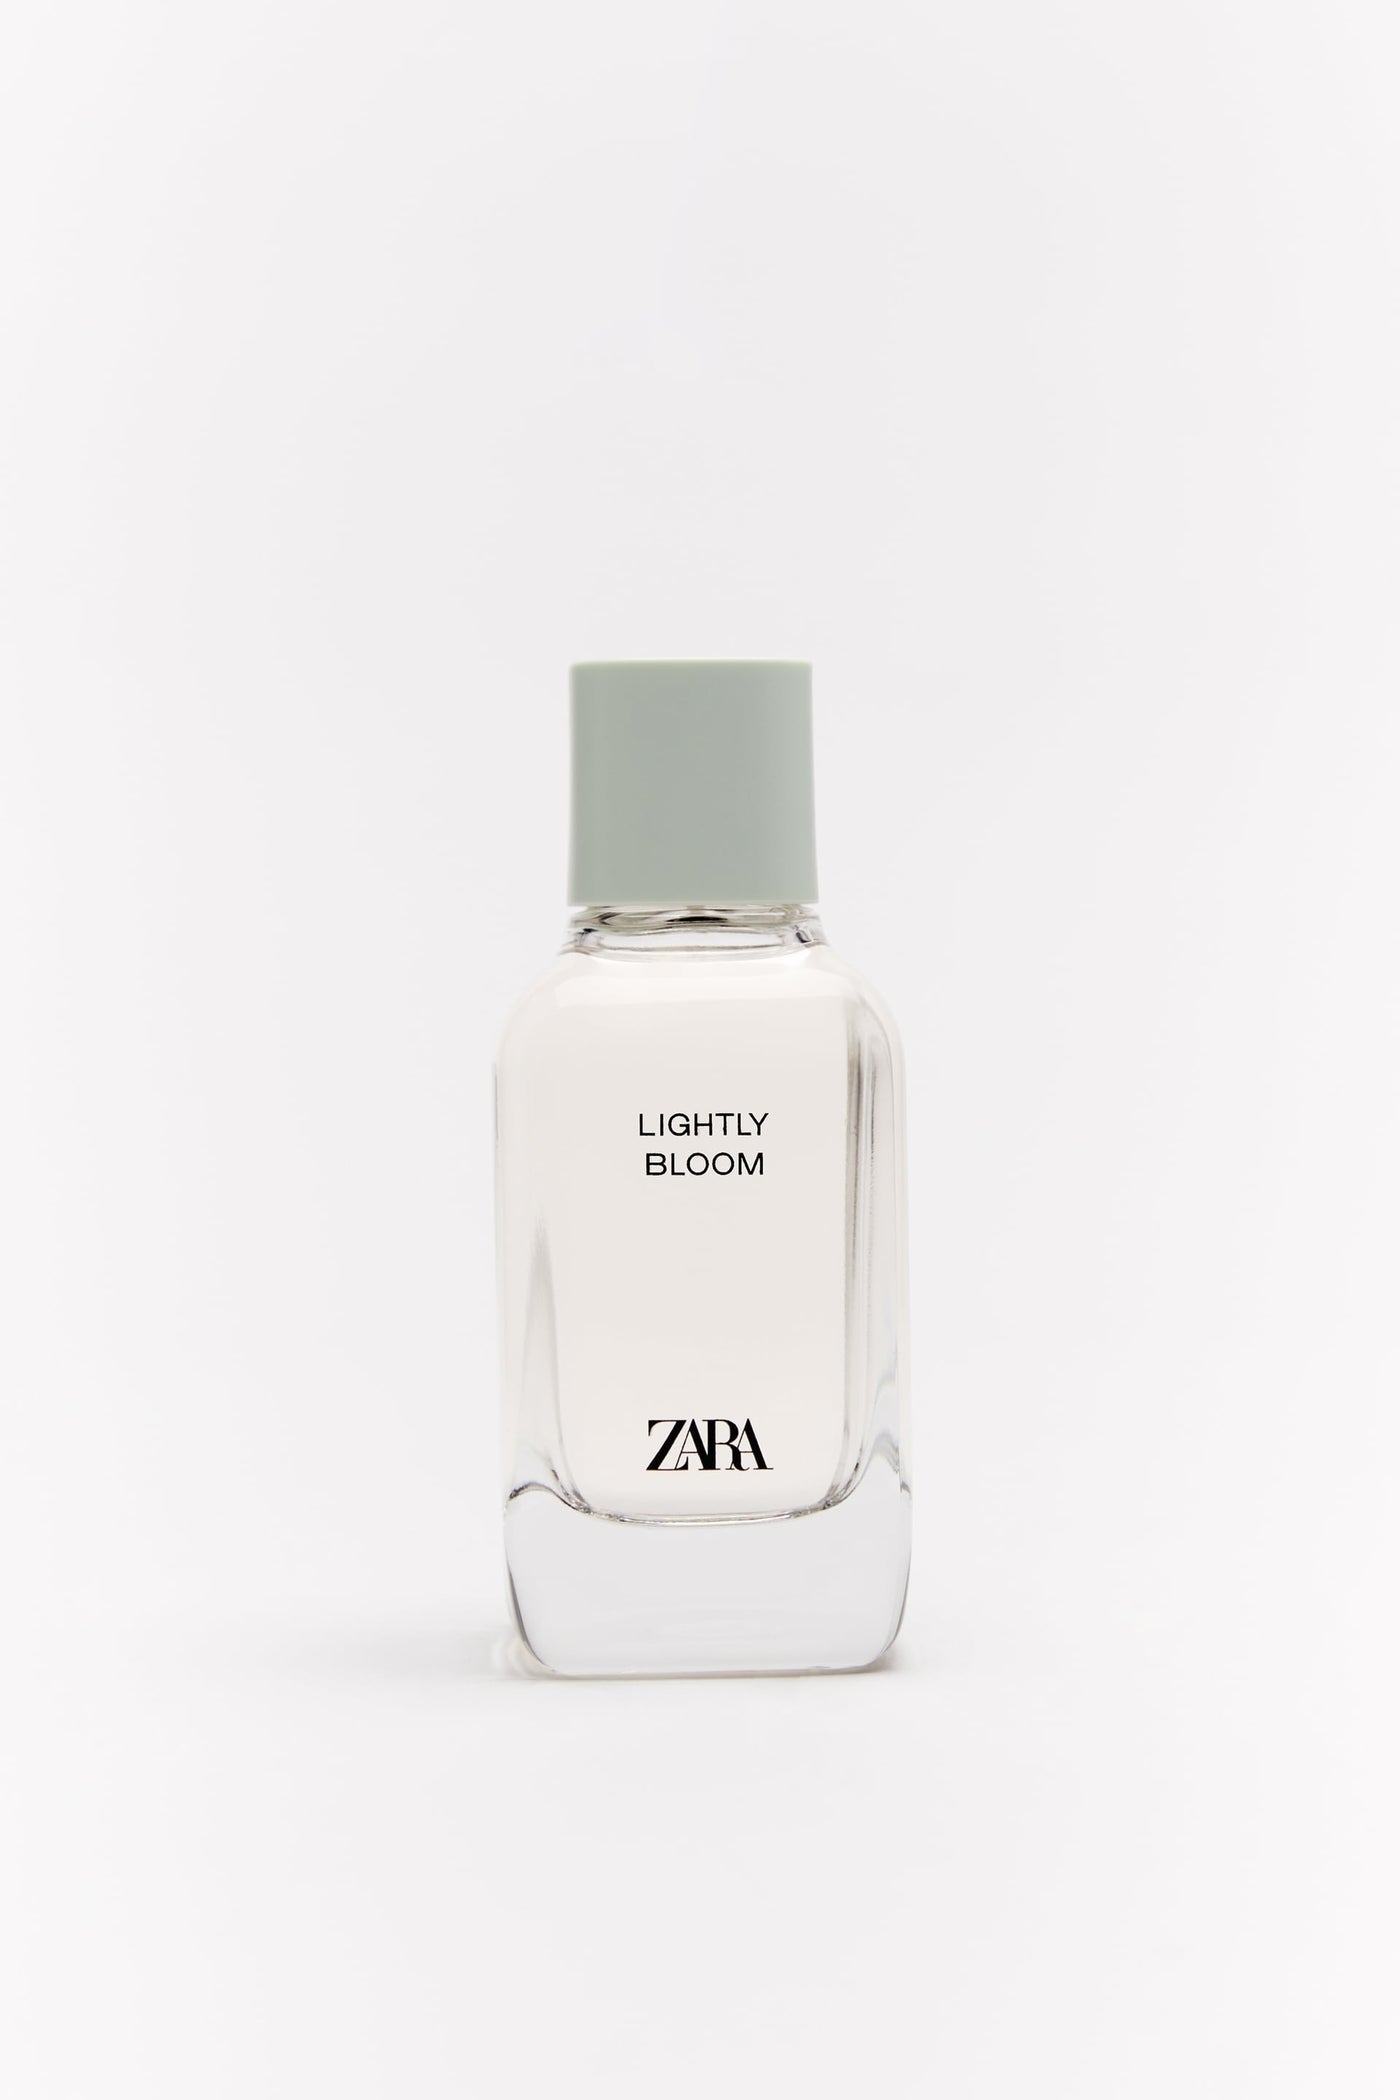 ZARA LIGHTLY BLOOM EDP FOR WOMEN 100ML(100ML) By ZARA100MLEau De Parfum 